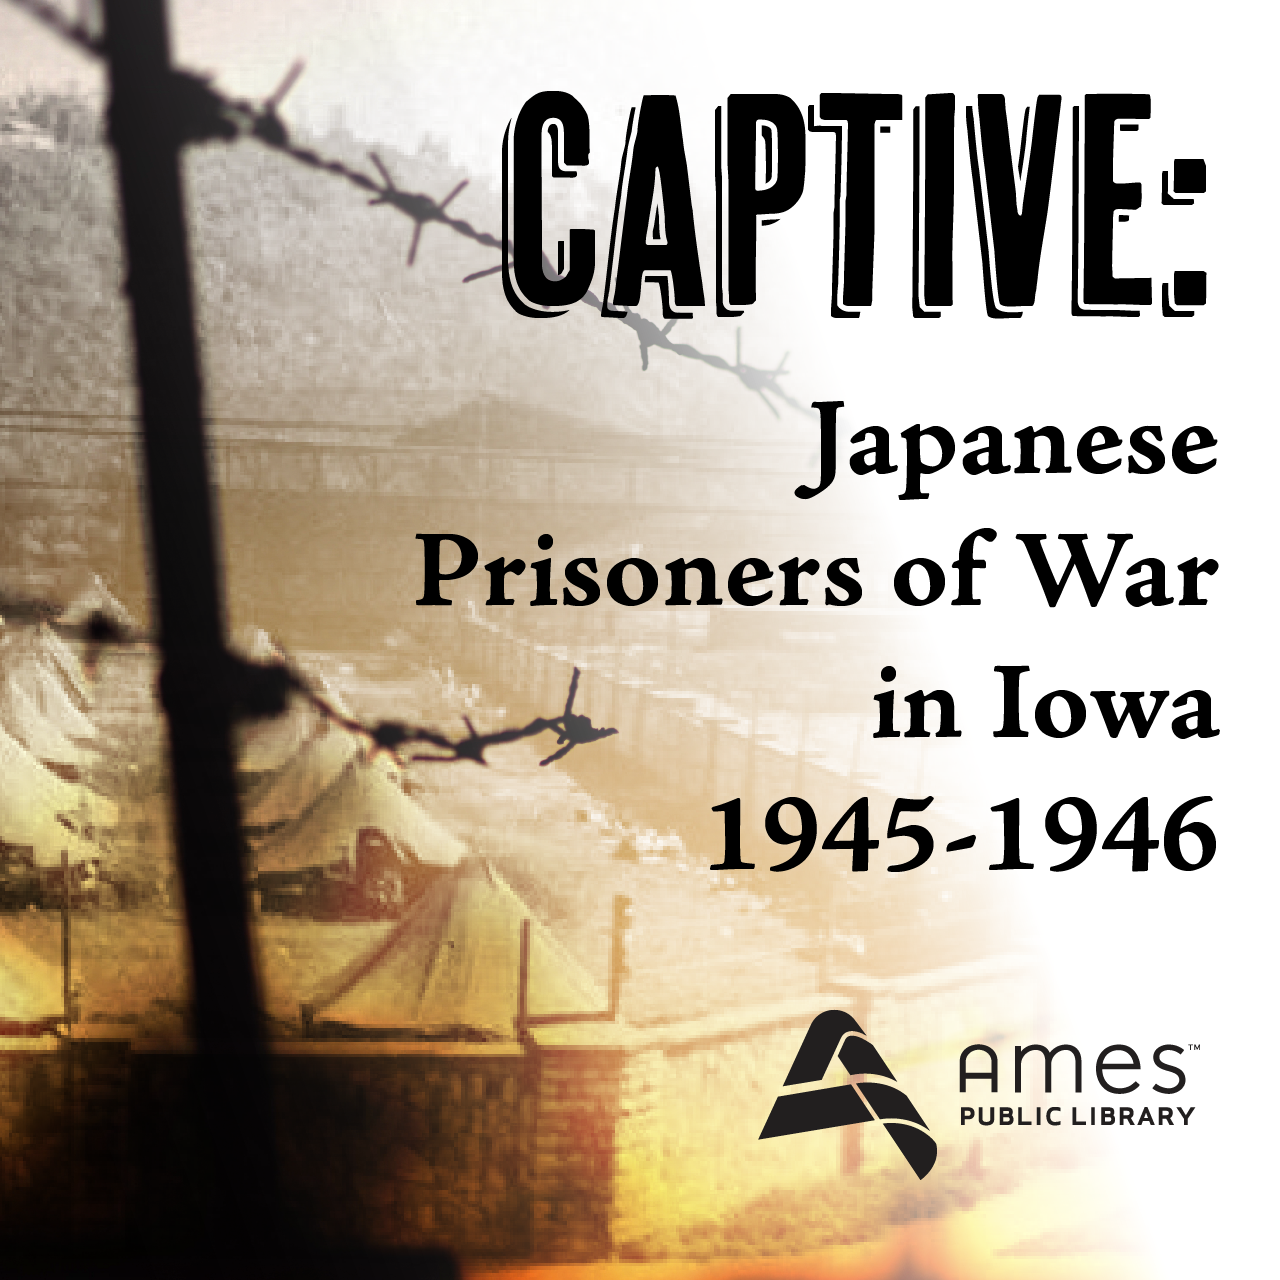 Captive: Japanese Prisoners of War in Iowa 1945-1946